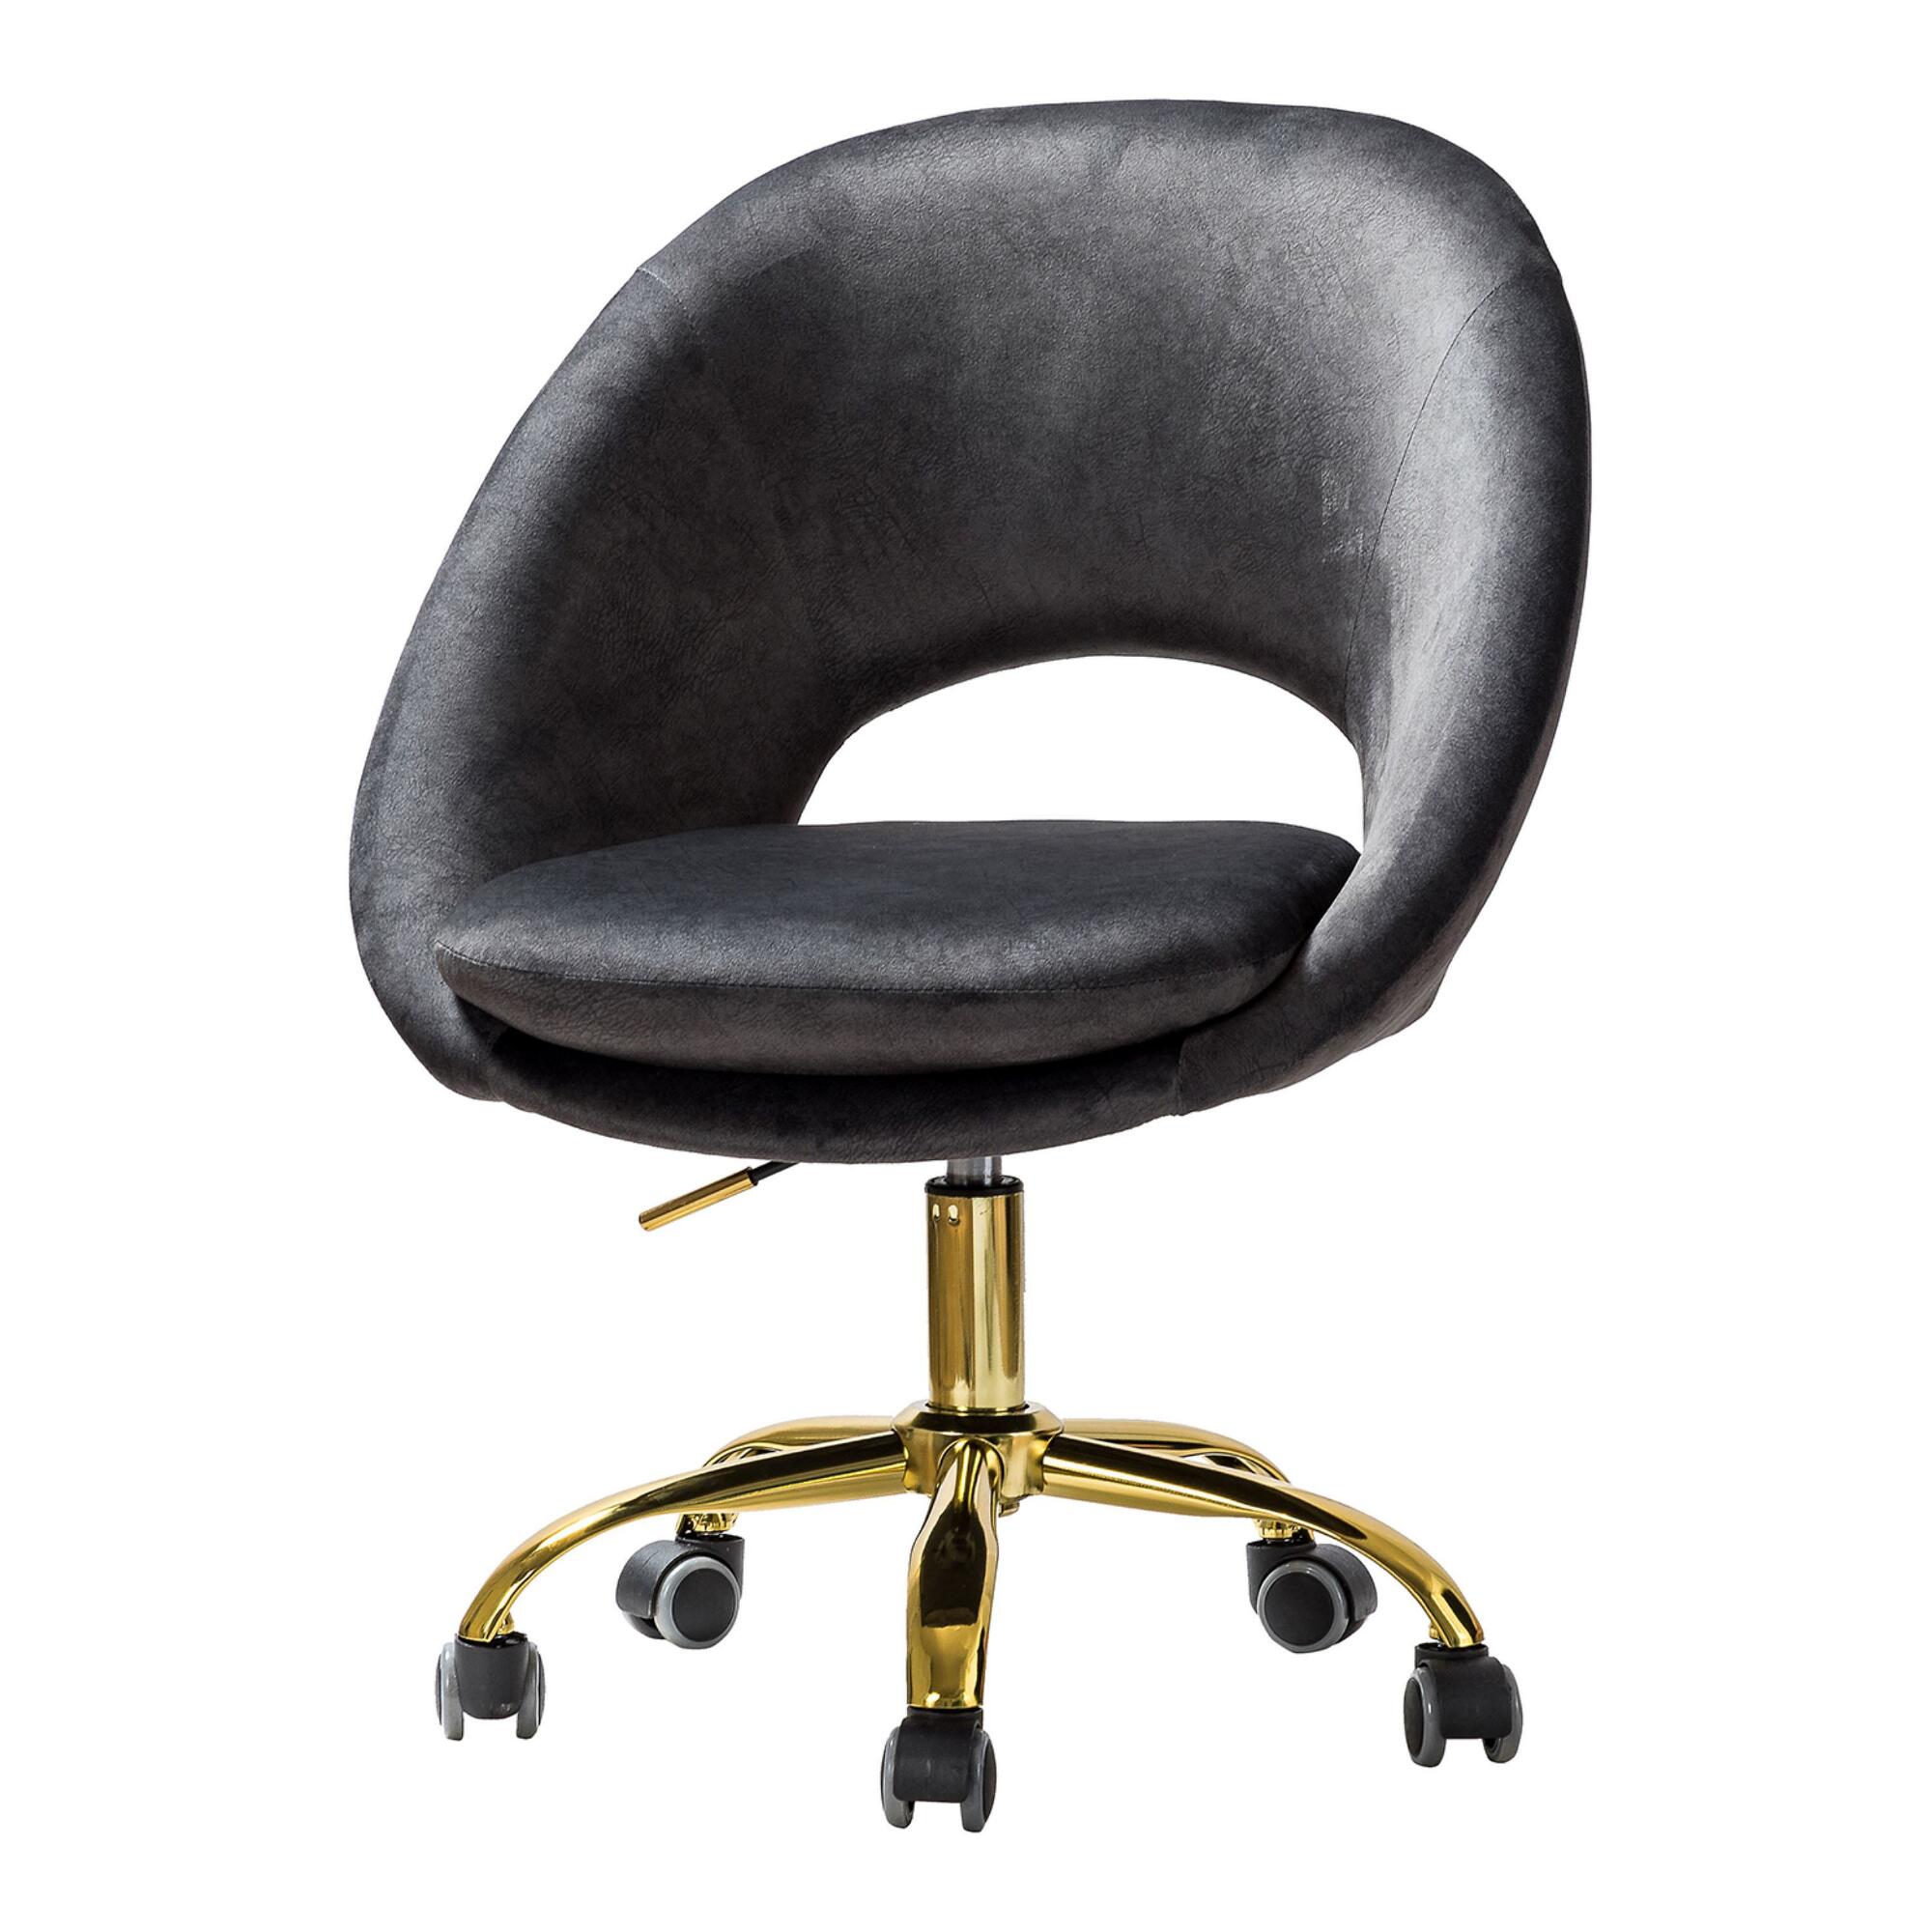 Velvet Westgate Upholstered Home Office Chair: Gray by World Market